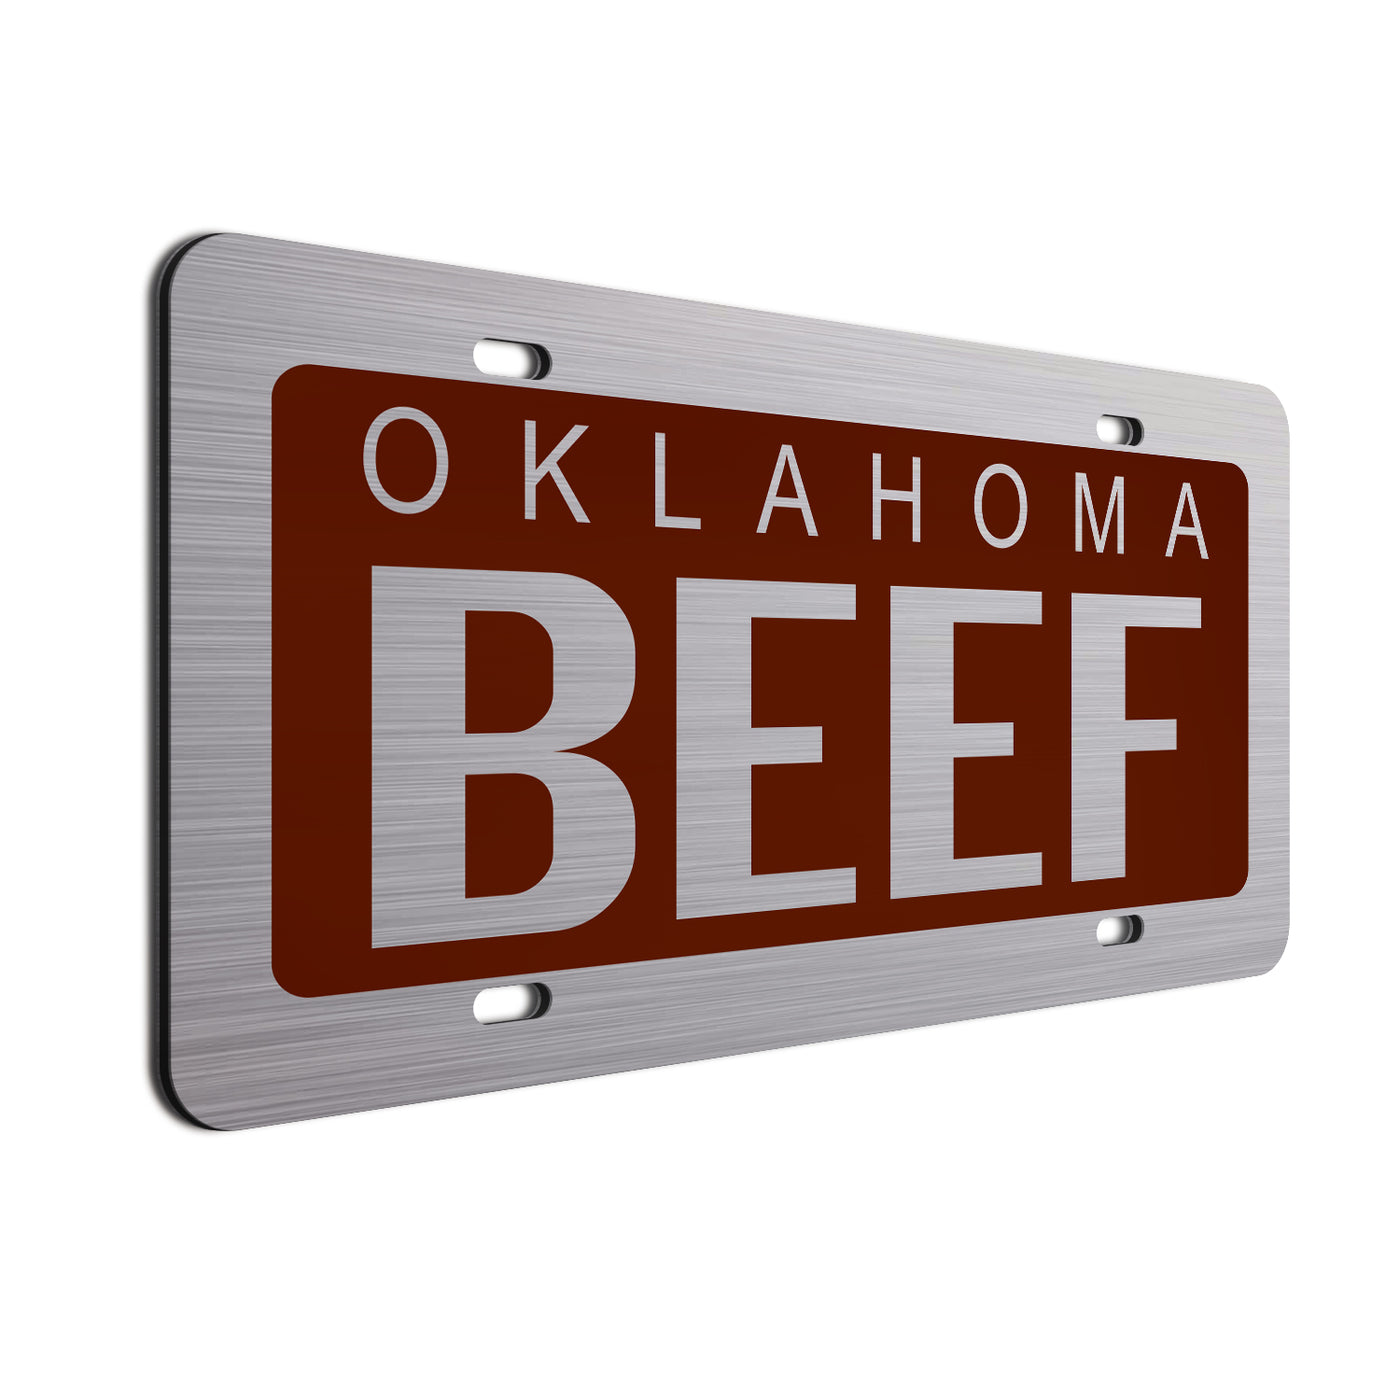 Oklahoma Beef Car License Plate Burgundy